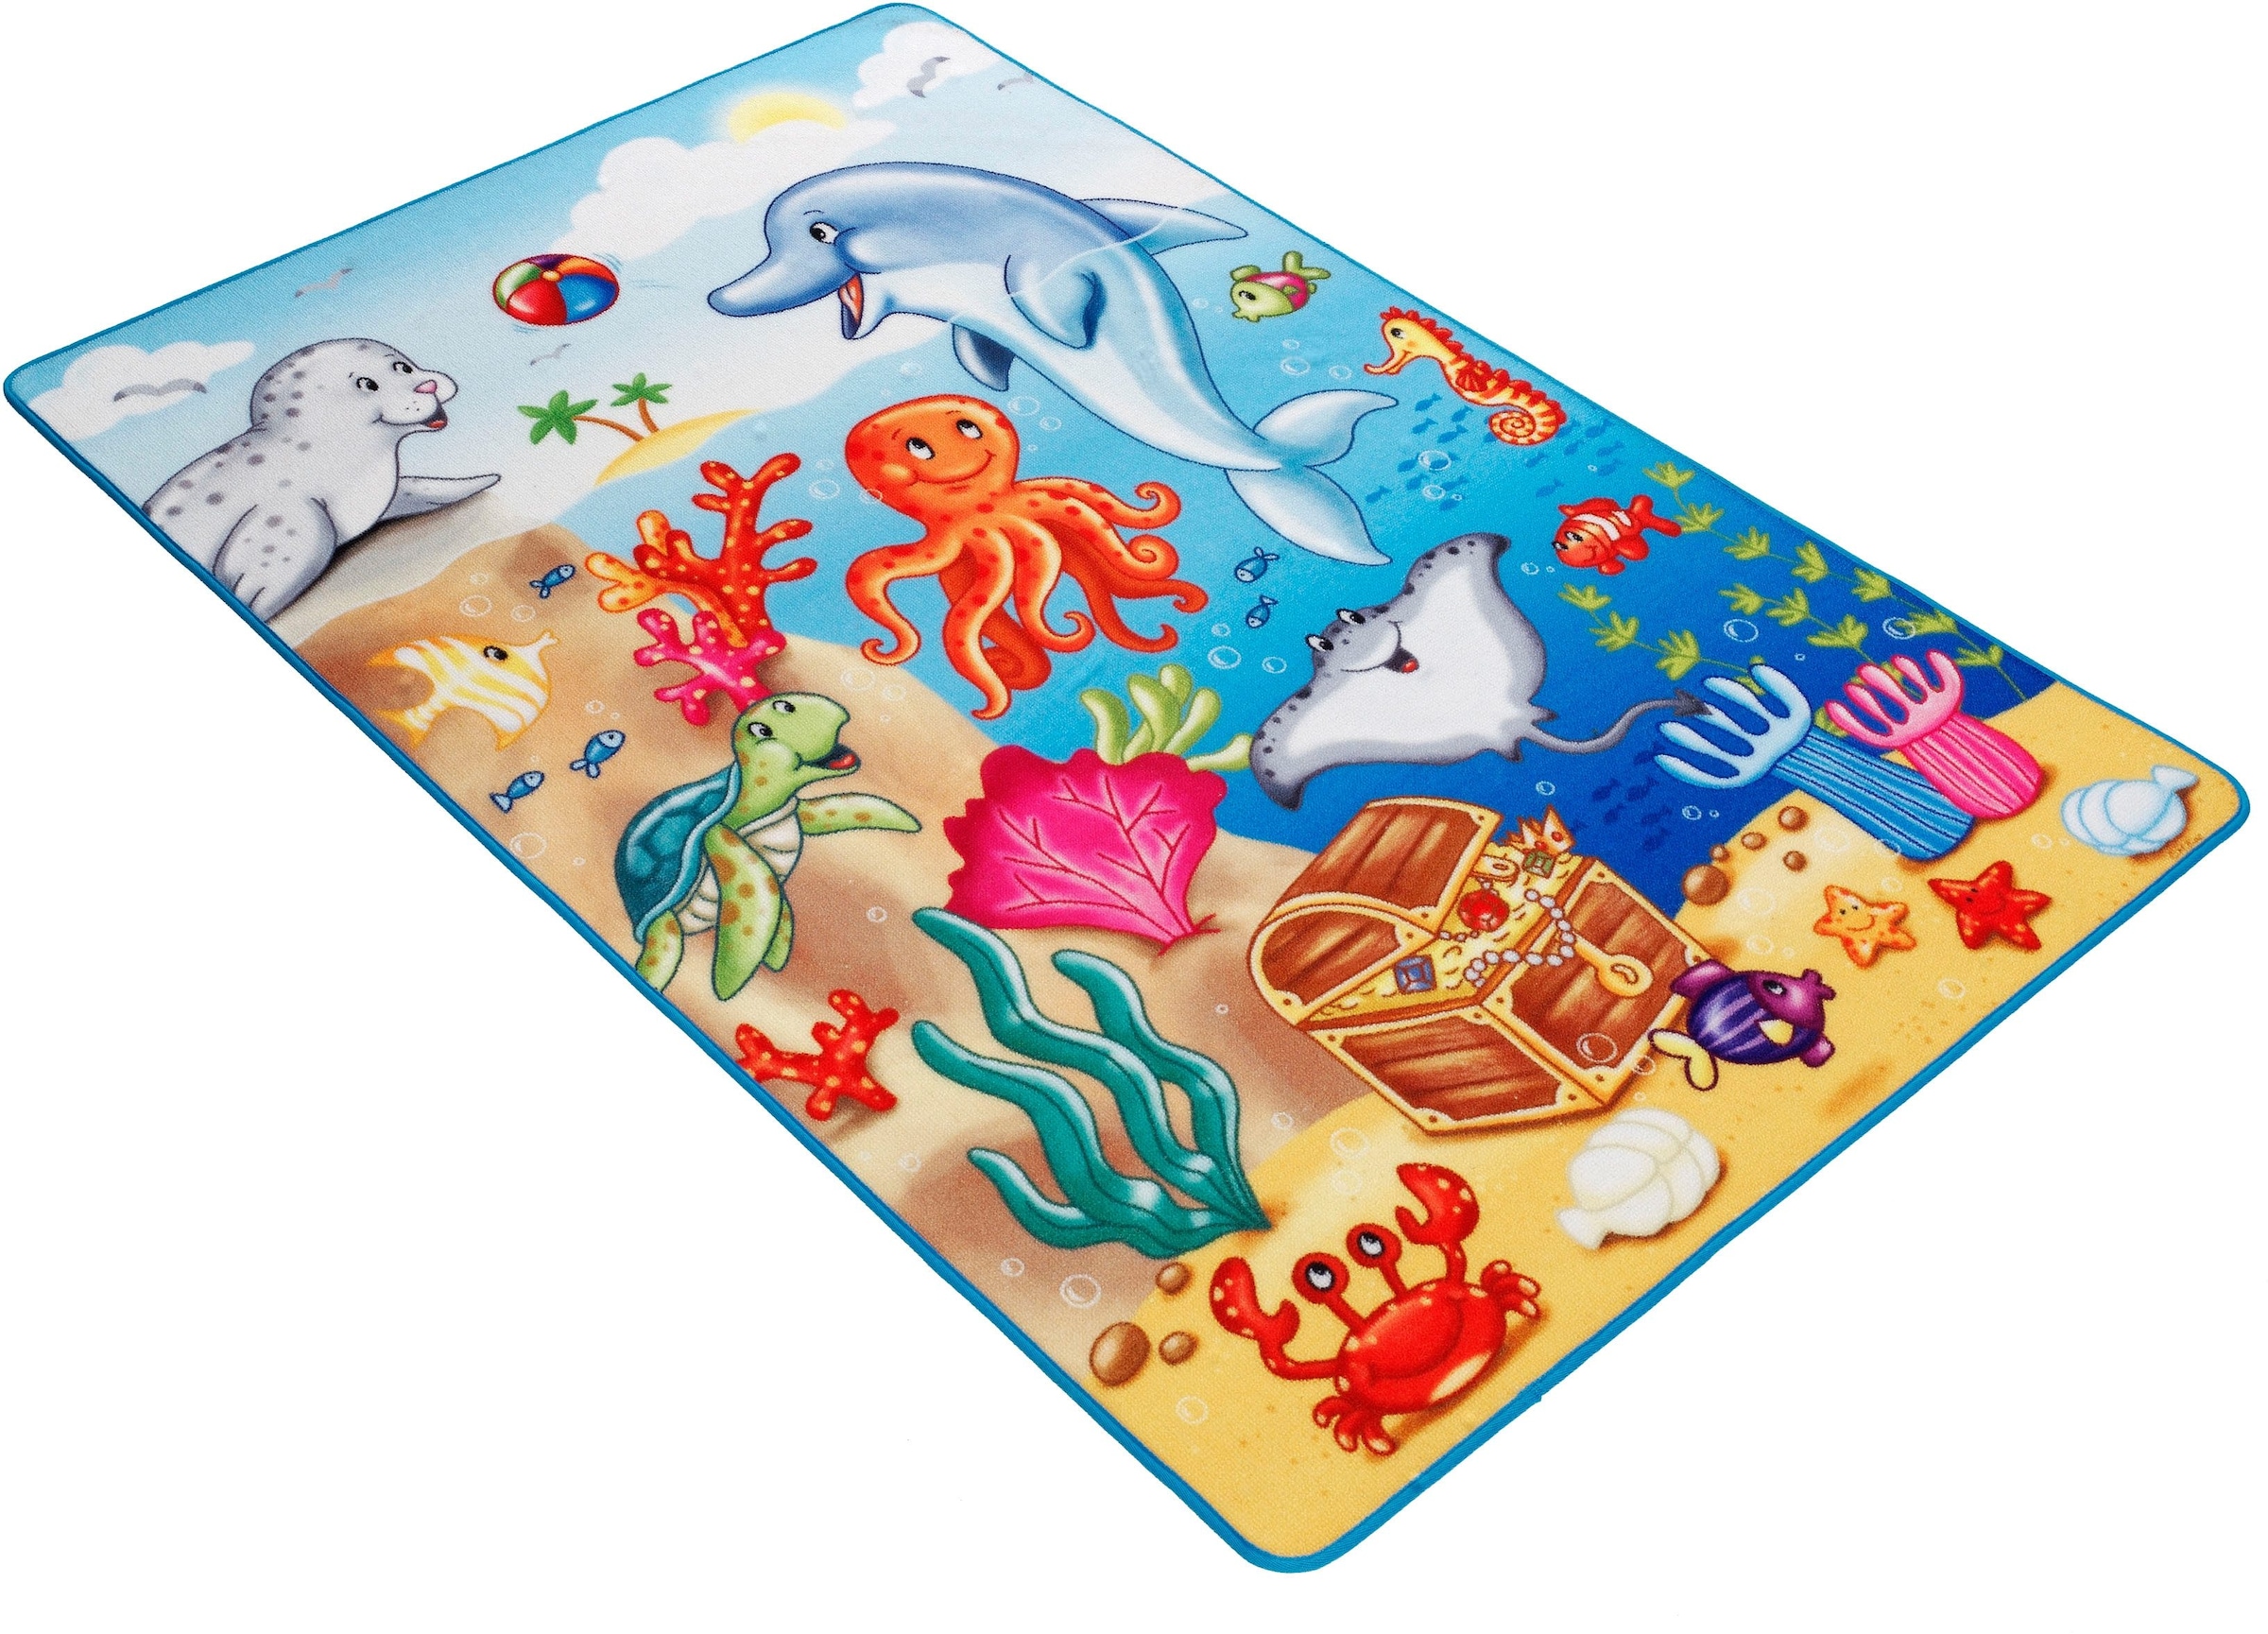 Kinderteppich »Lovely Kids LK-7«, rechteckig, Motiv Tiere im Meer, Kinderzimmer